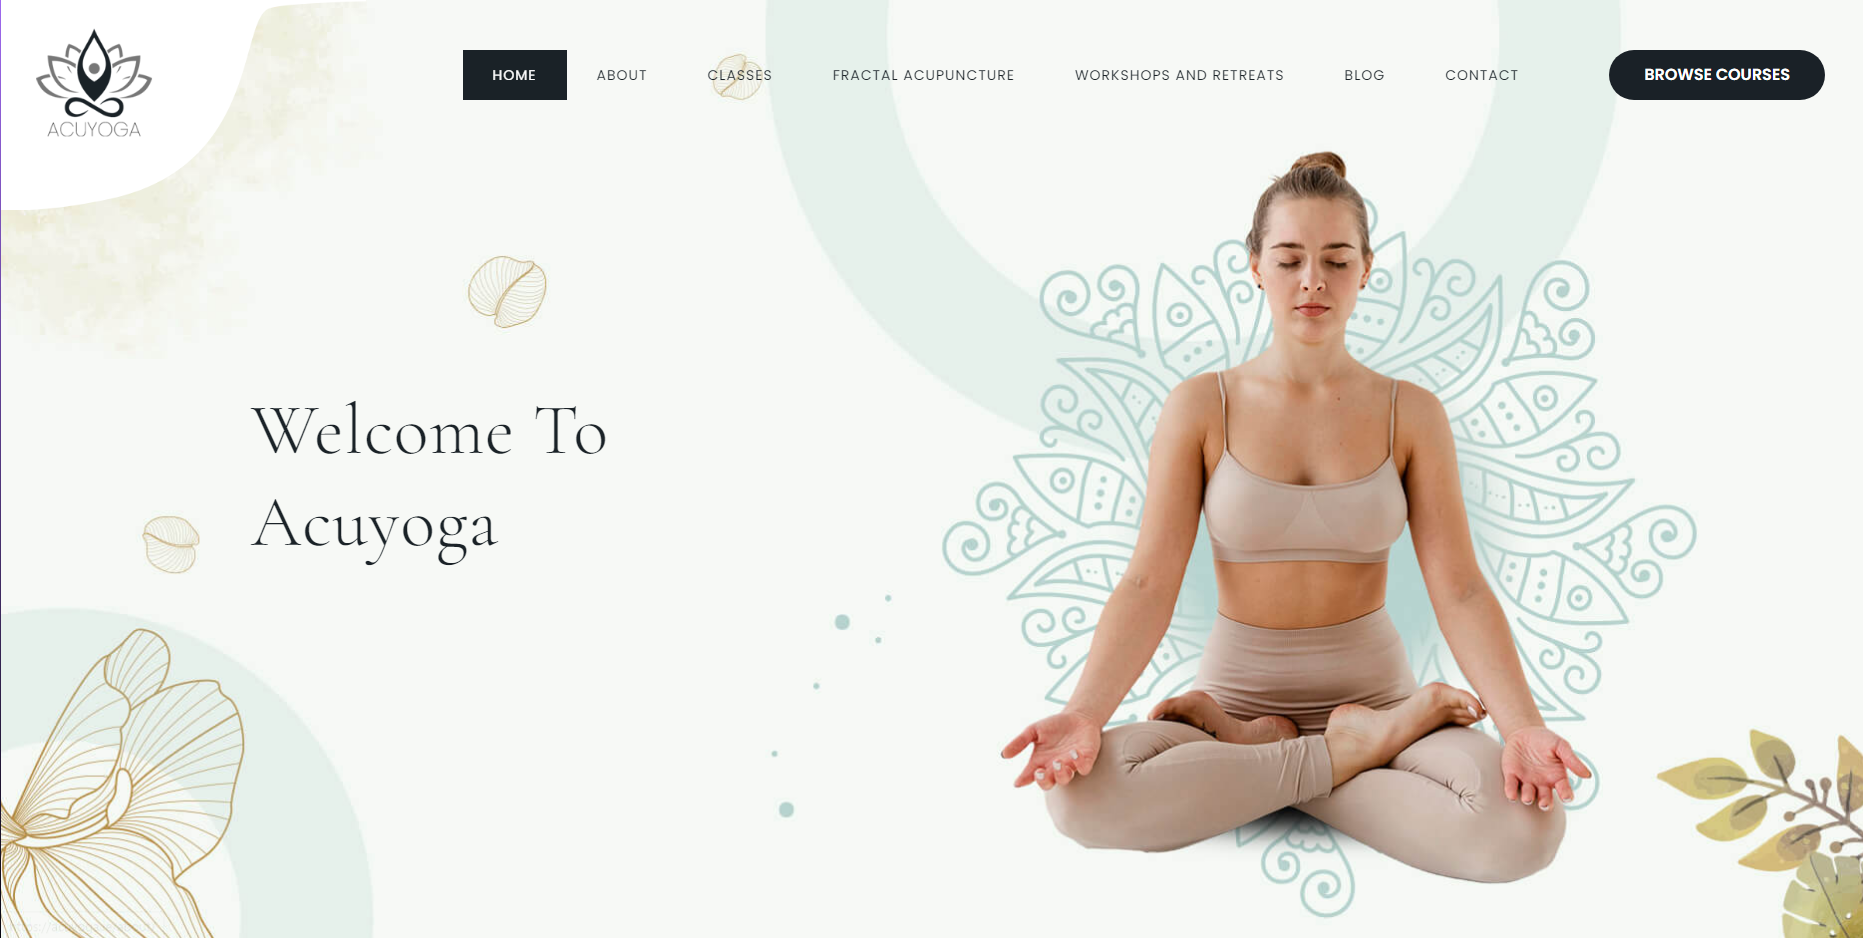 Yoga Teacher Training, link to retreats and courses